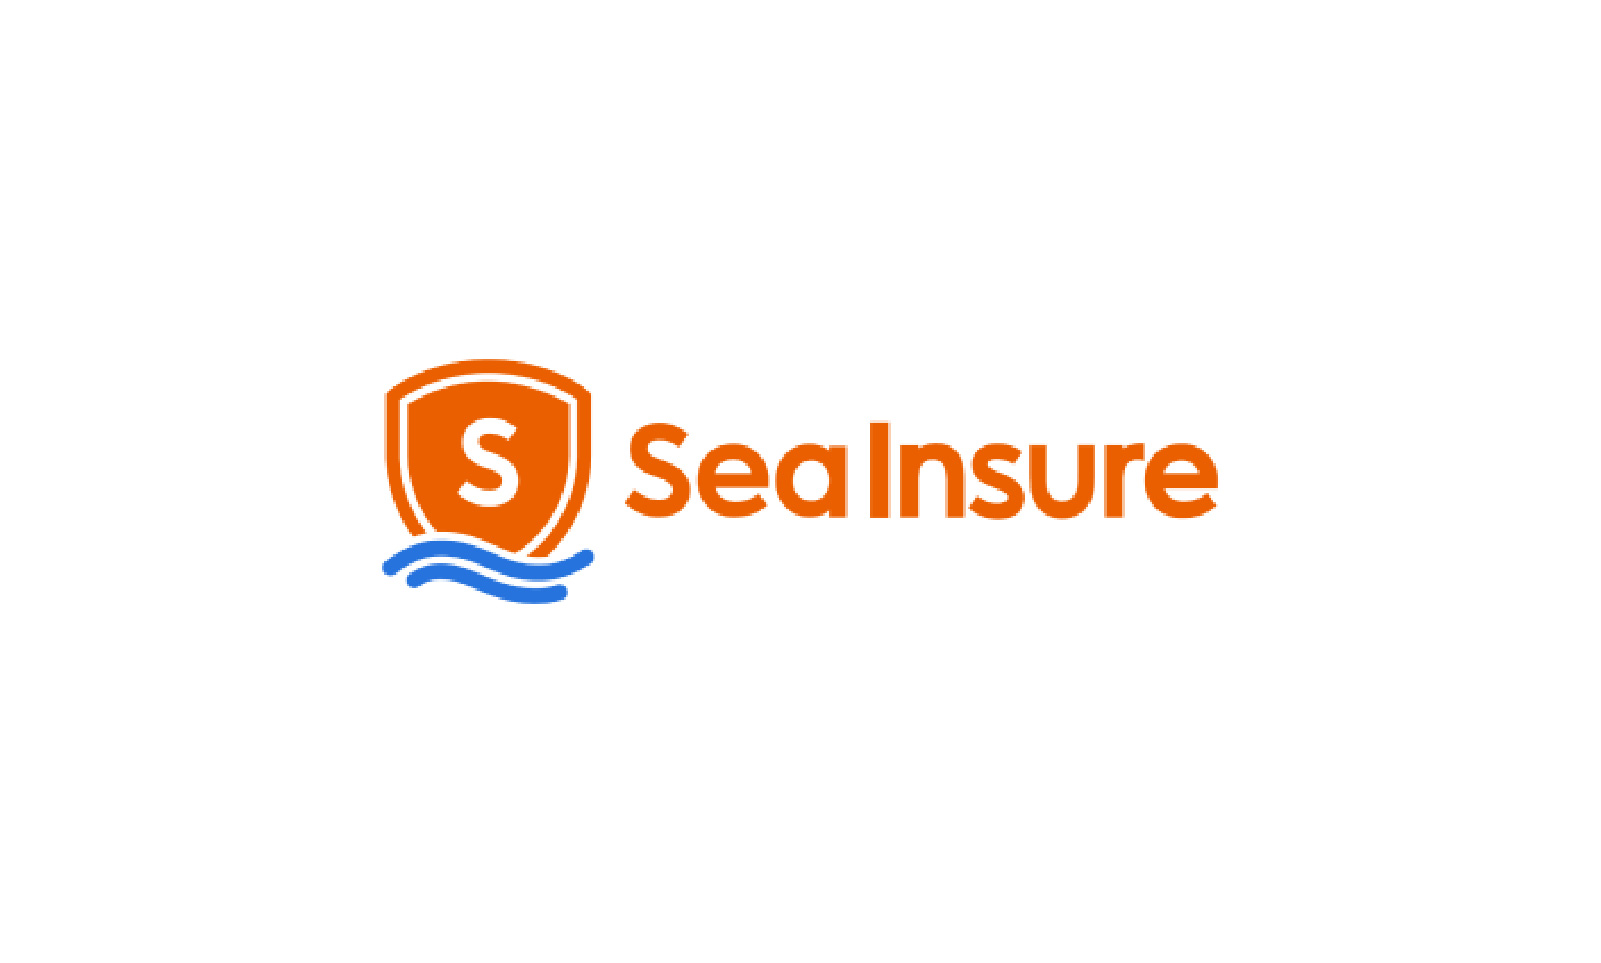 SeaInsure Indonesia